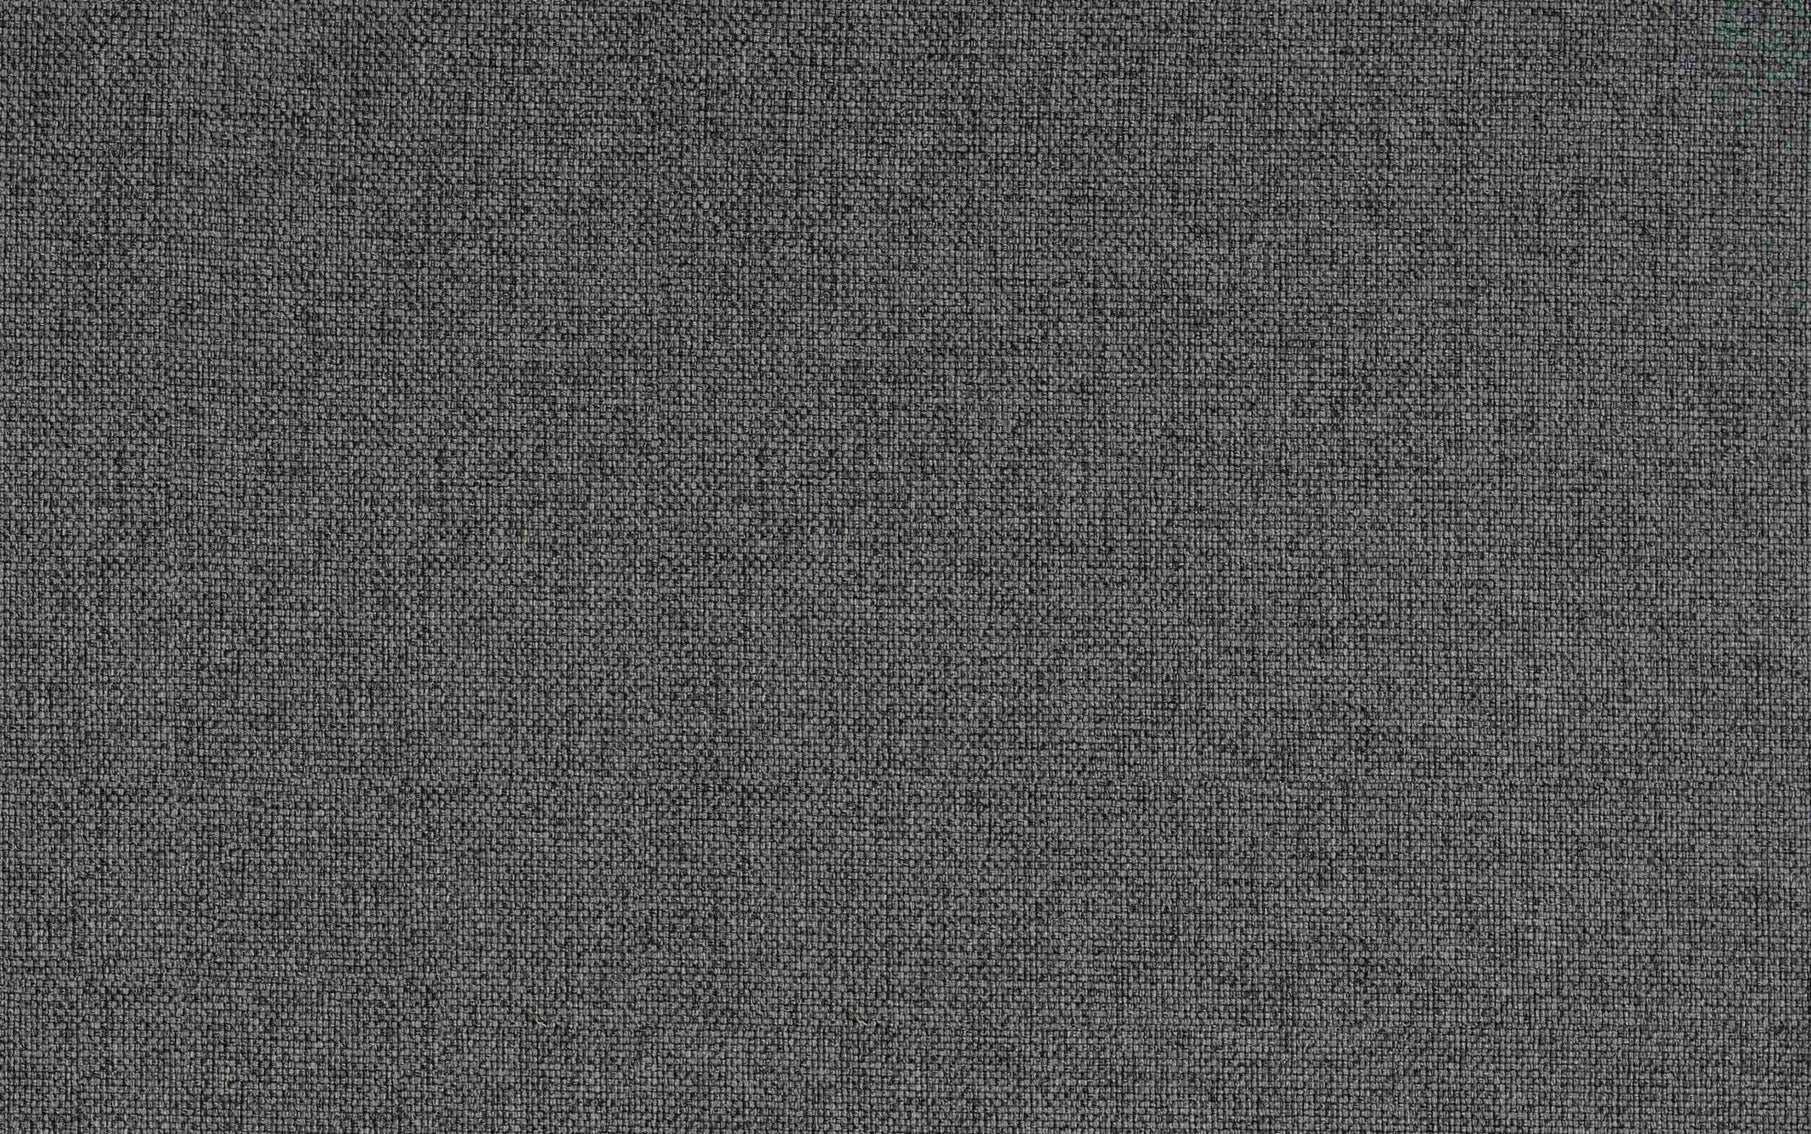 Pebble Grey Performance Fabric | Ava 76 inch Mid Century Sofa with Ottoman Set